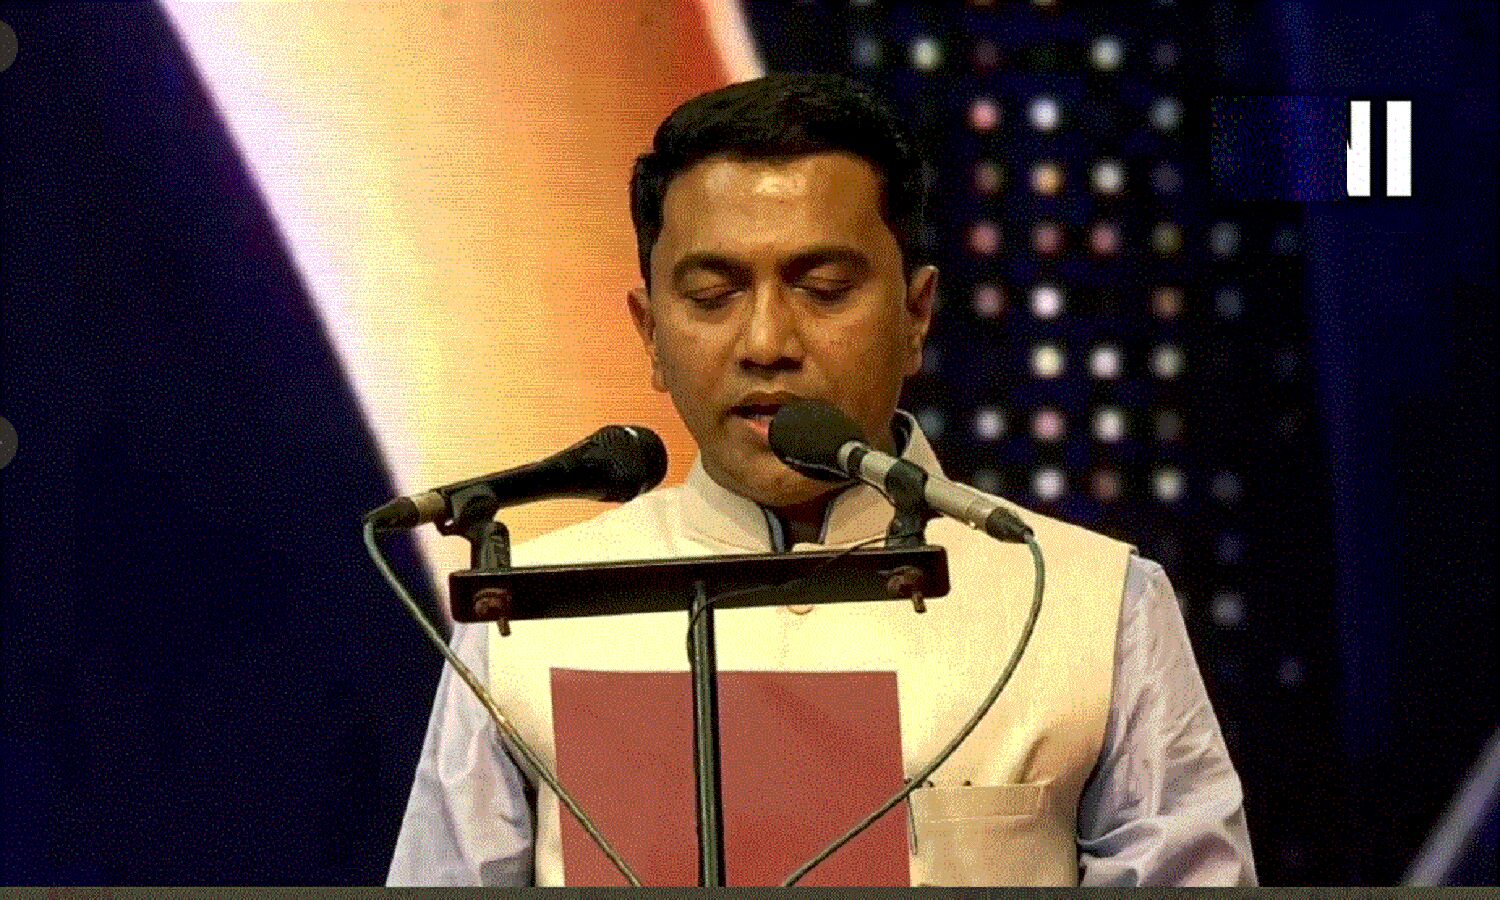 Goa CM Oath Ceremony : दूसरी बार गोवा के मुख्यमंत्री बने प्रमोद सावंत